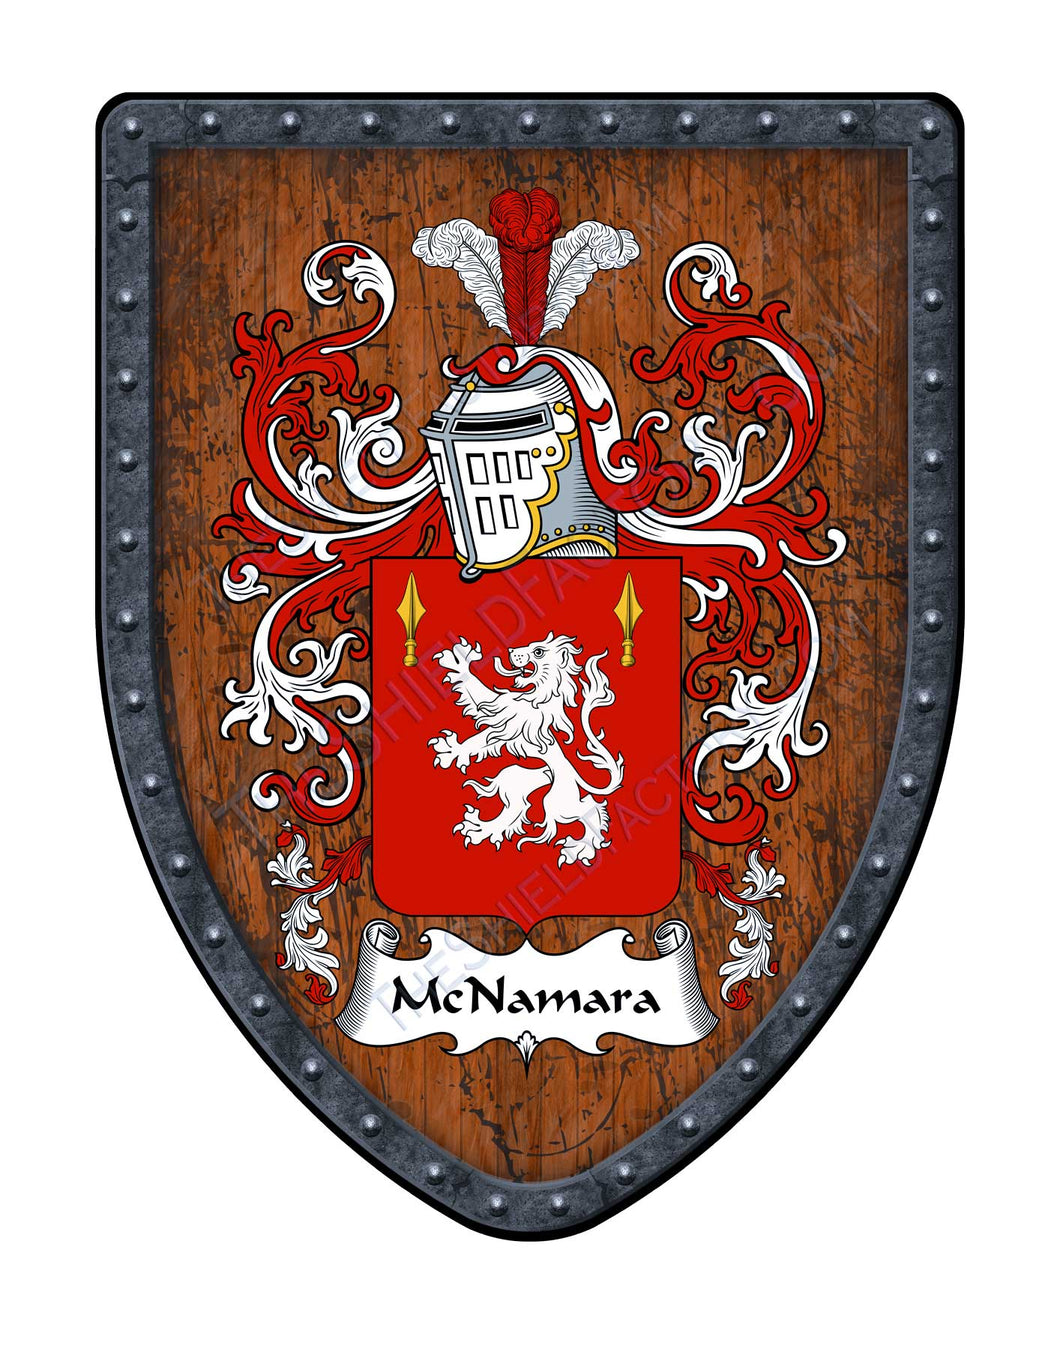 Macnamara or McNamara Family Coat of Arms